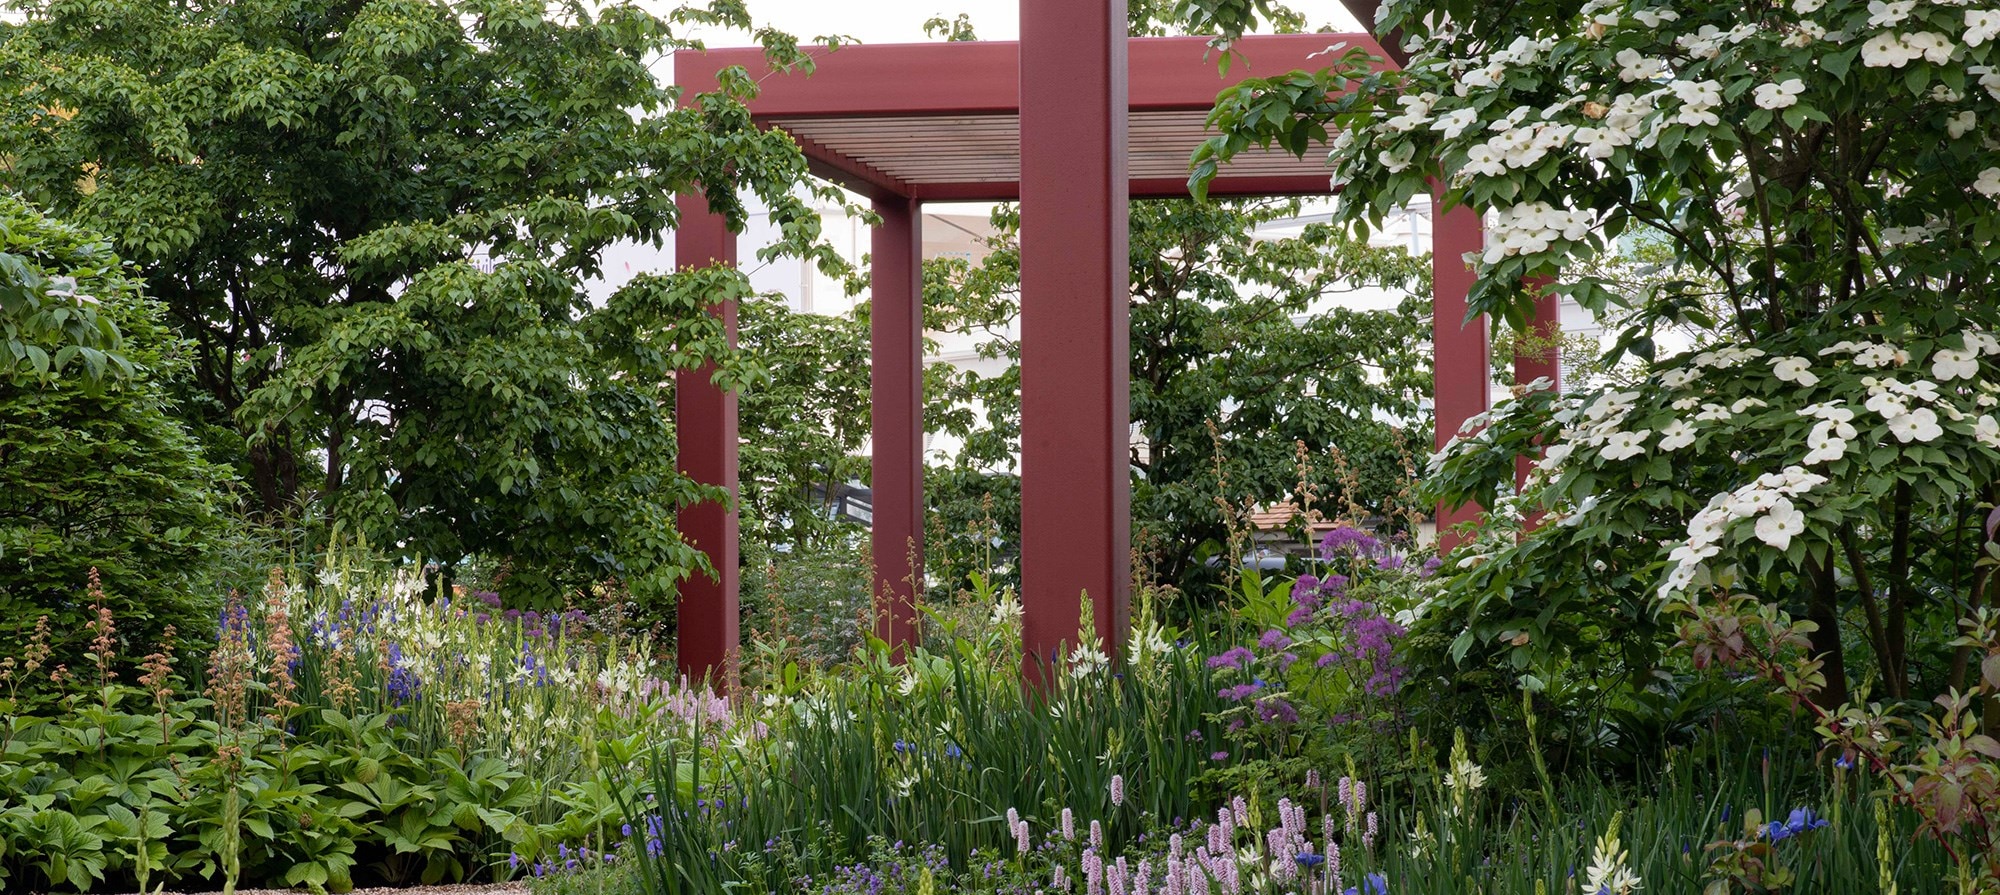 The RHS Bridgewater Garden designed by Tom Stuart-Smith